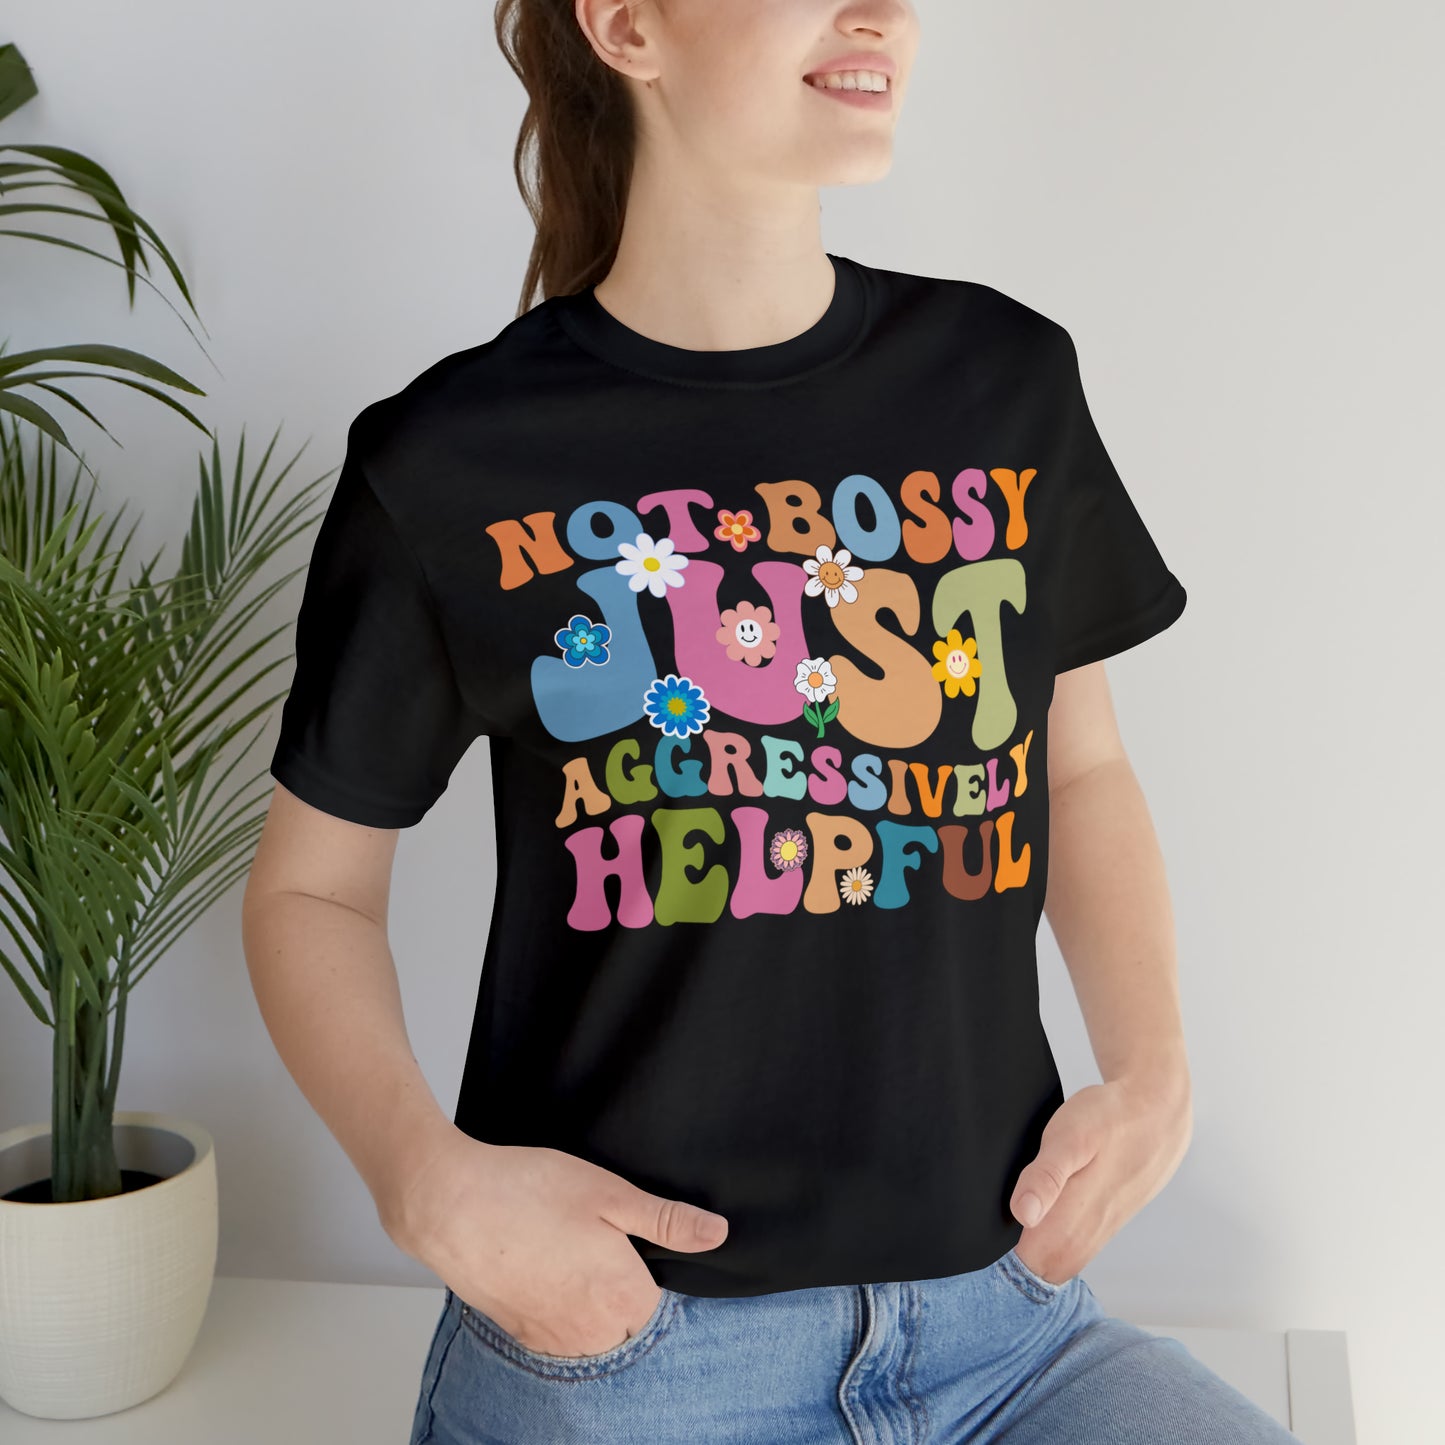 Not Bossy Just Aggressively Helpful Shirt, Bossy Mom Shirt, Shirt for Women, Sarcasm Shirt, Sarcastic Mom Shirt, T586